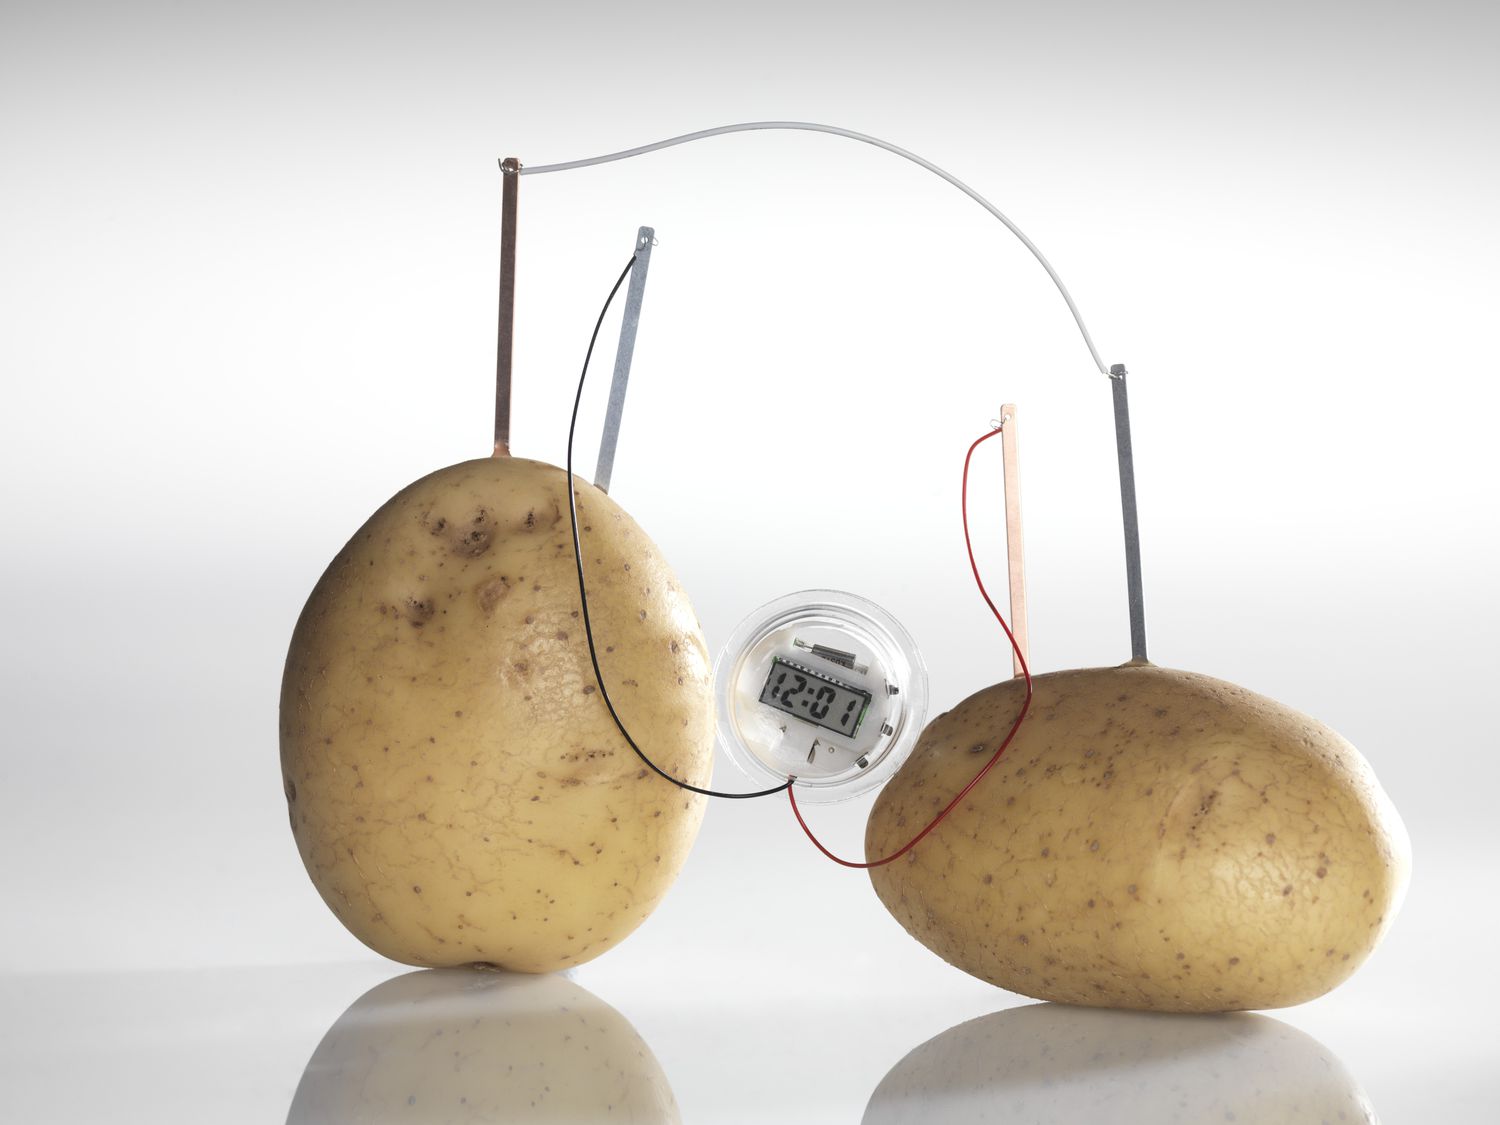 How Does Potato Clock Work